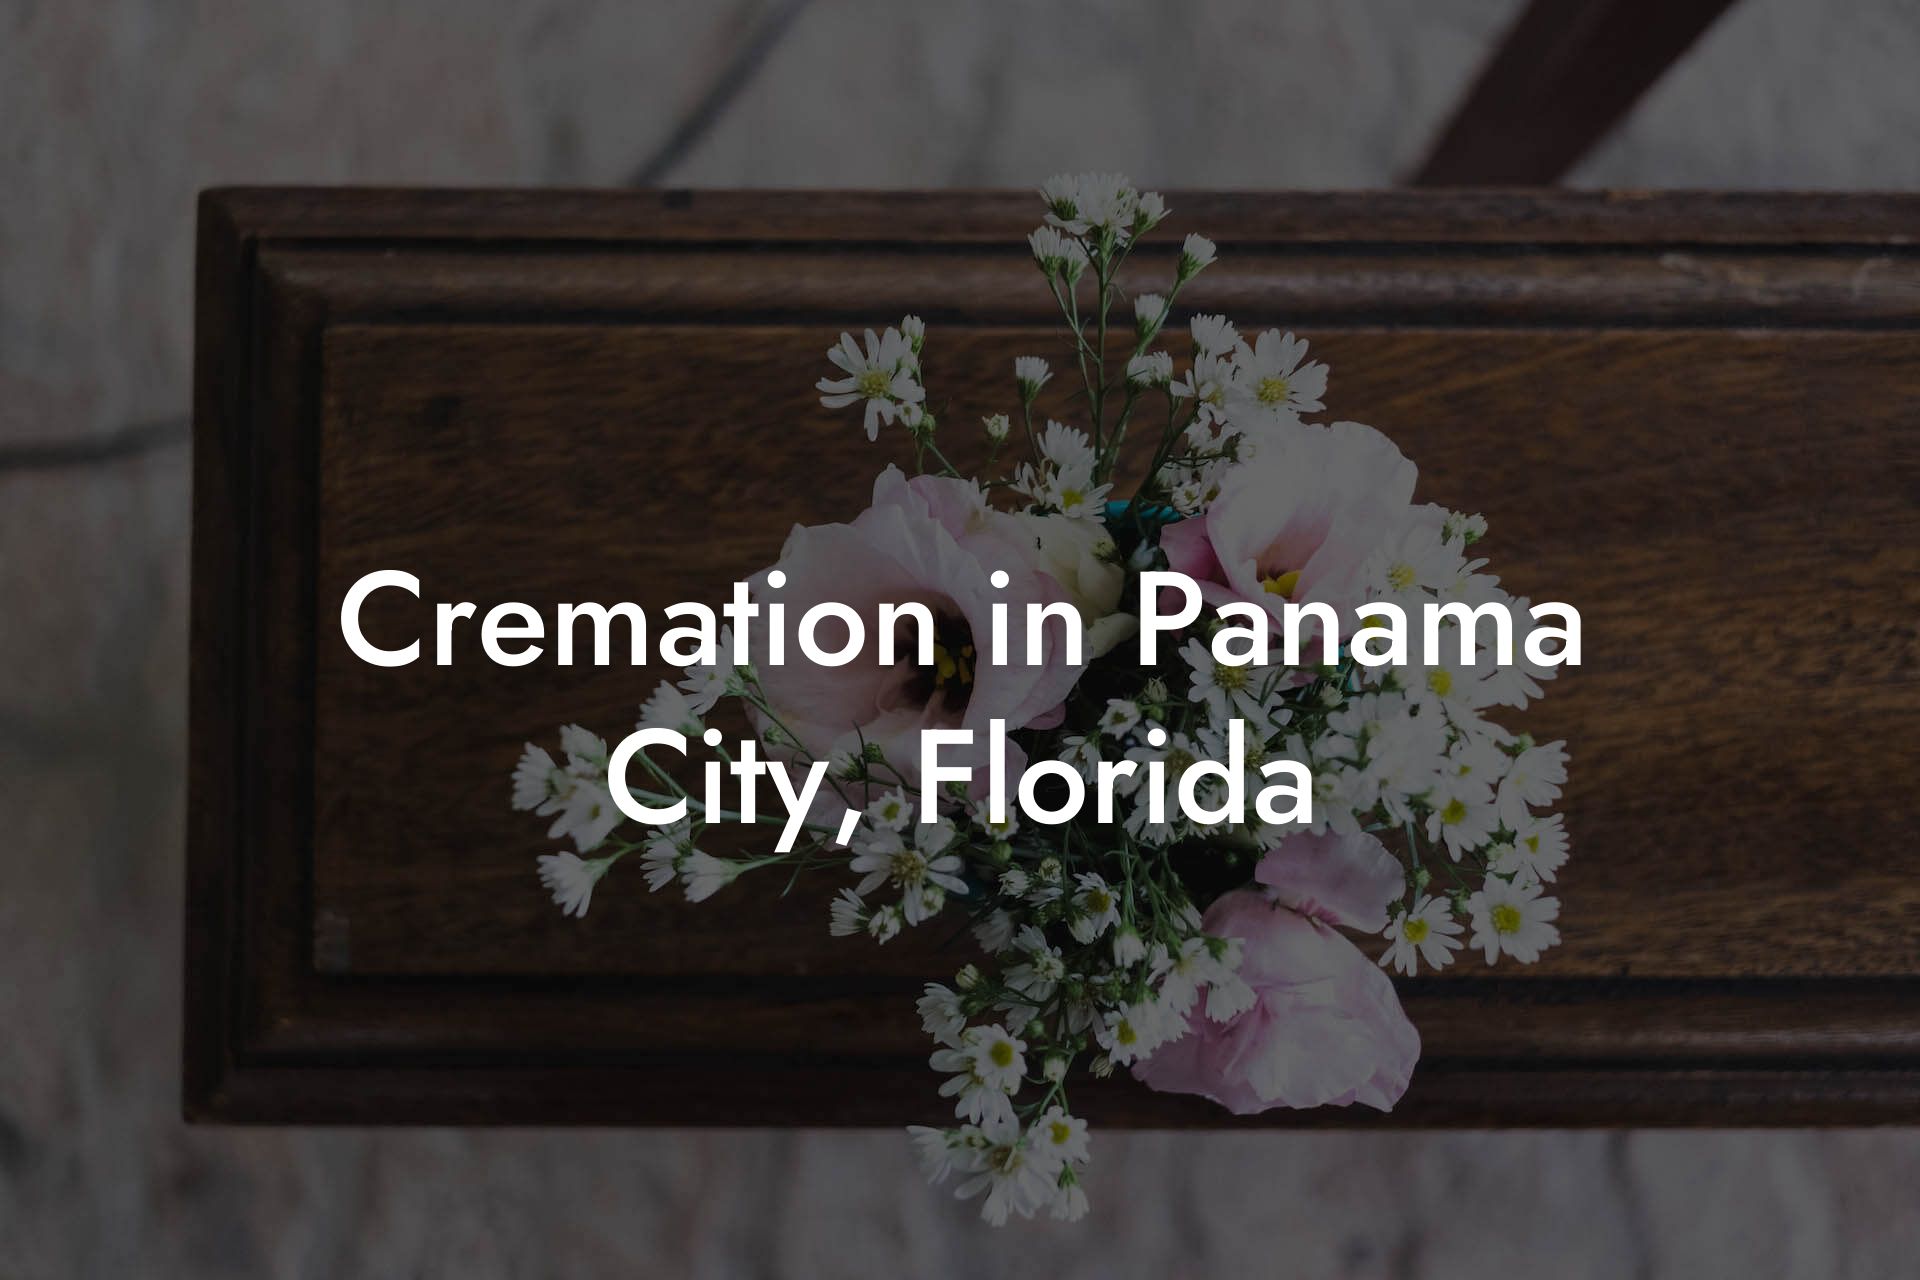 Cremation in Panama City, Florida